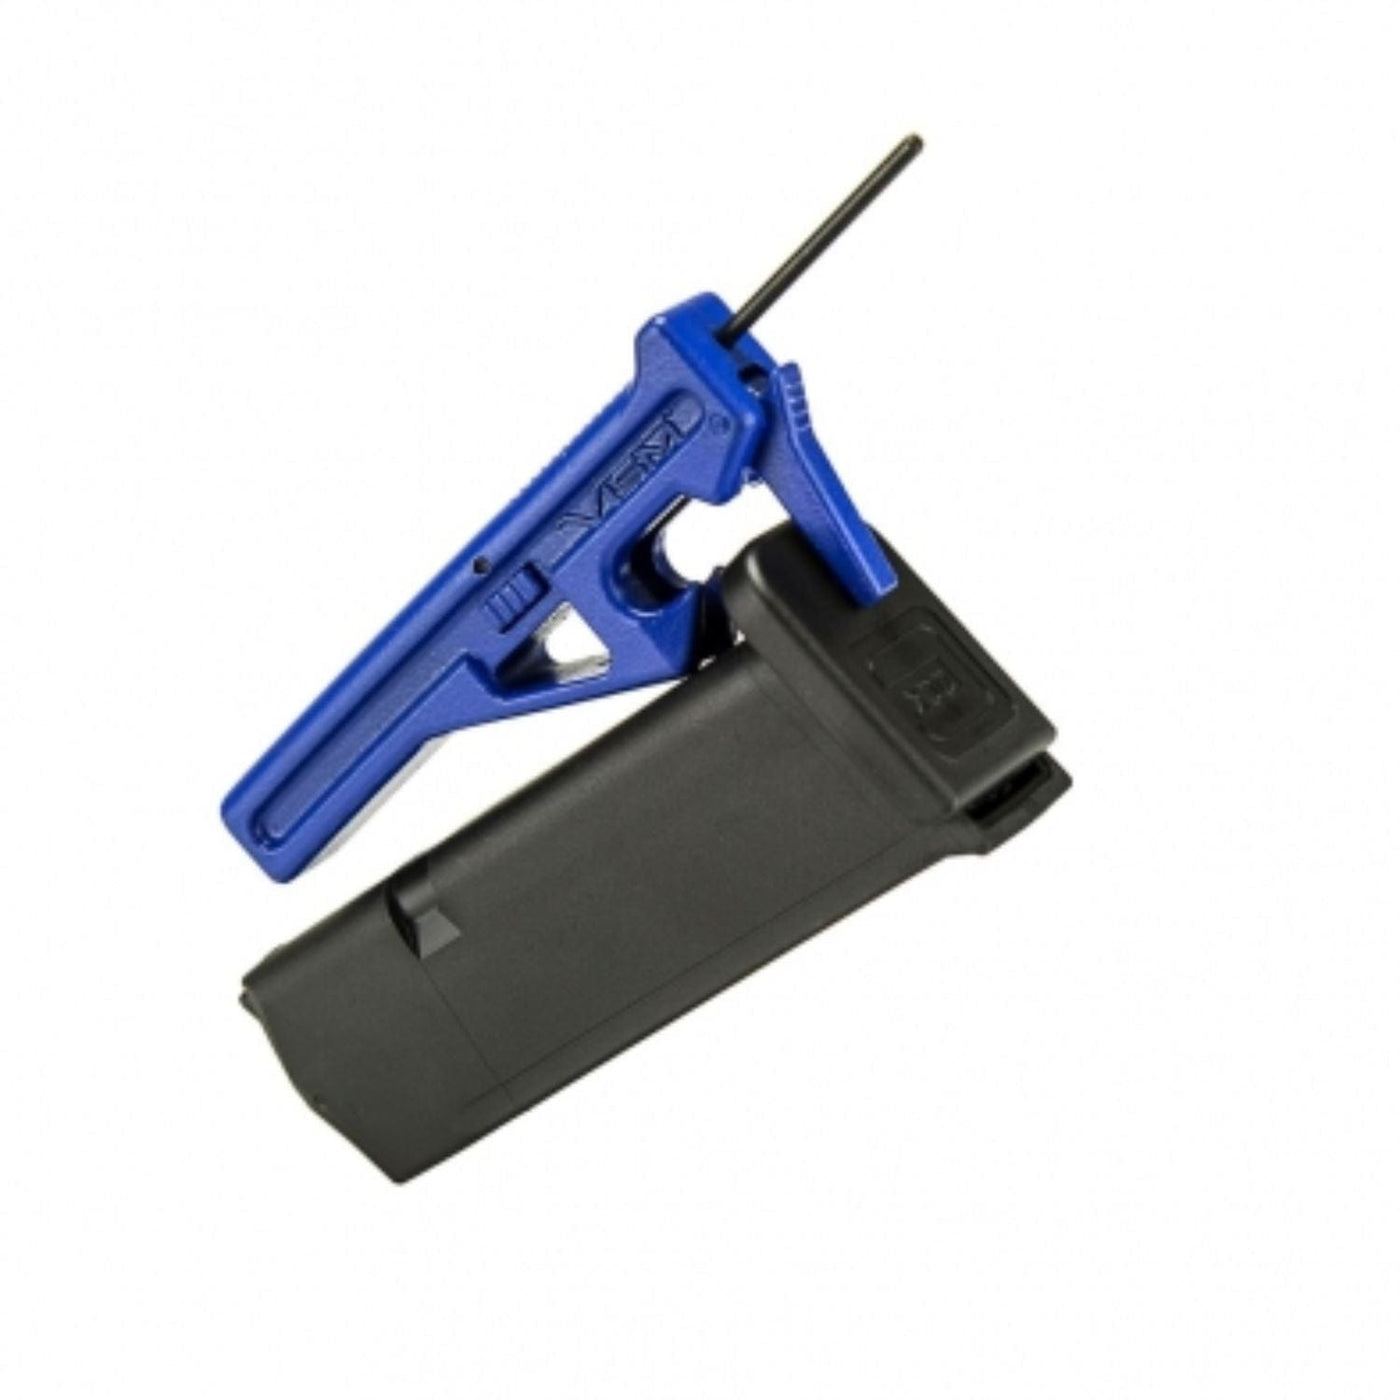 Vism Vism G5+ Glock Pocket Tool Shooting